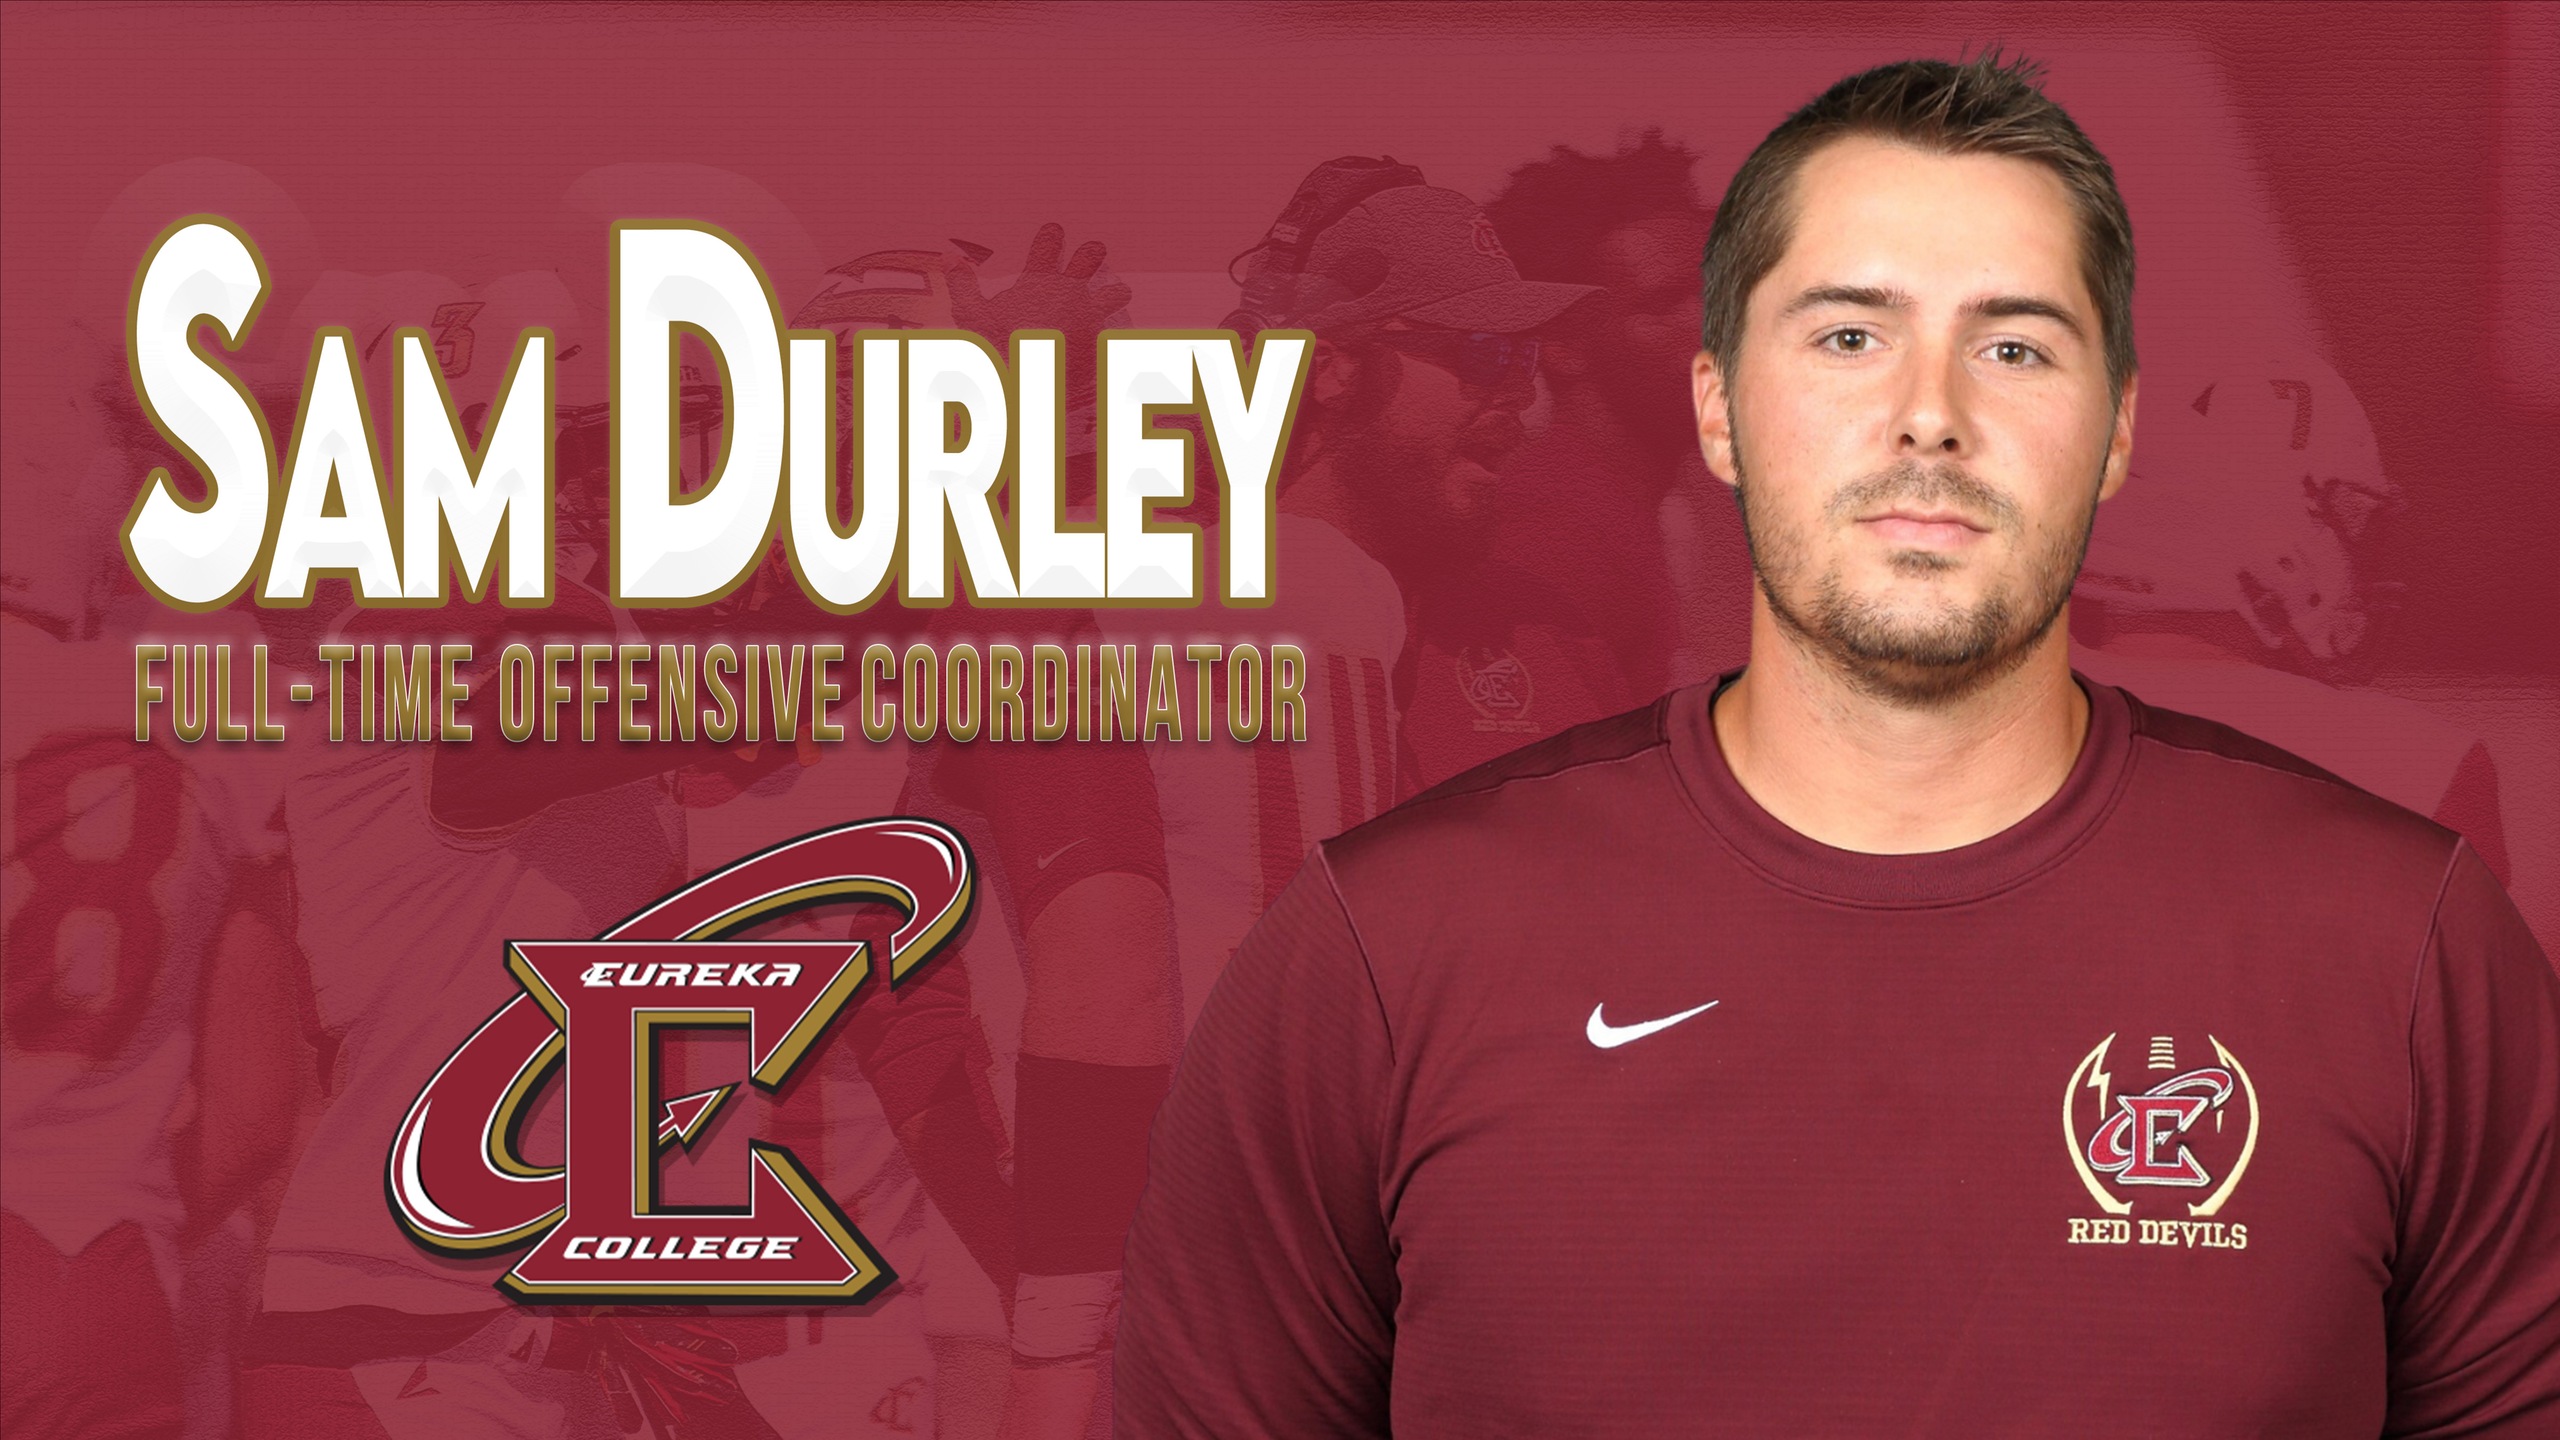 Sam Durley Named Full-Time Offensive Coordinator at Eureka College 